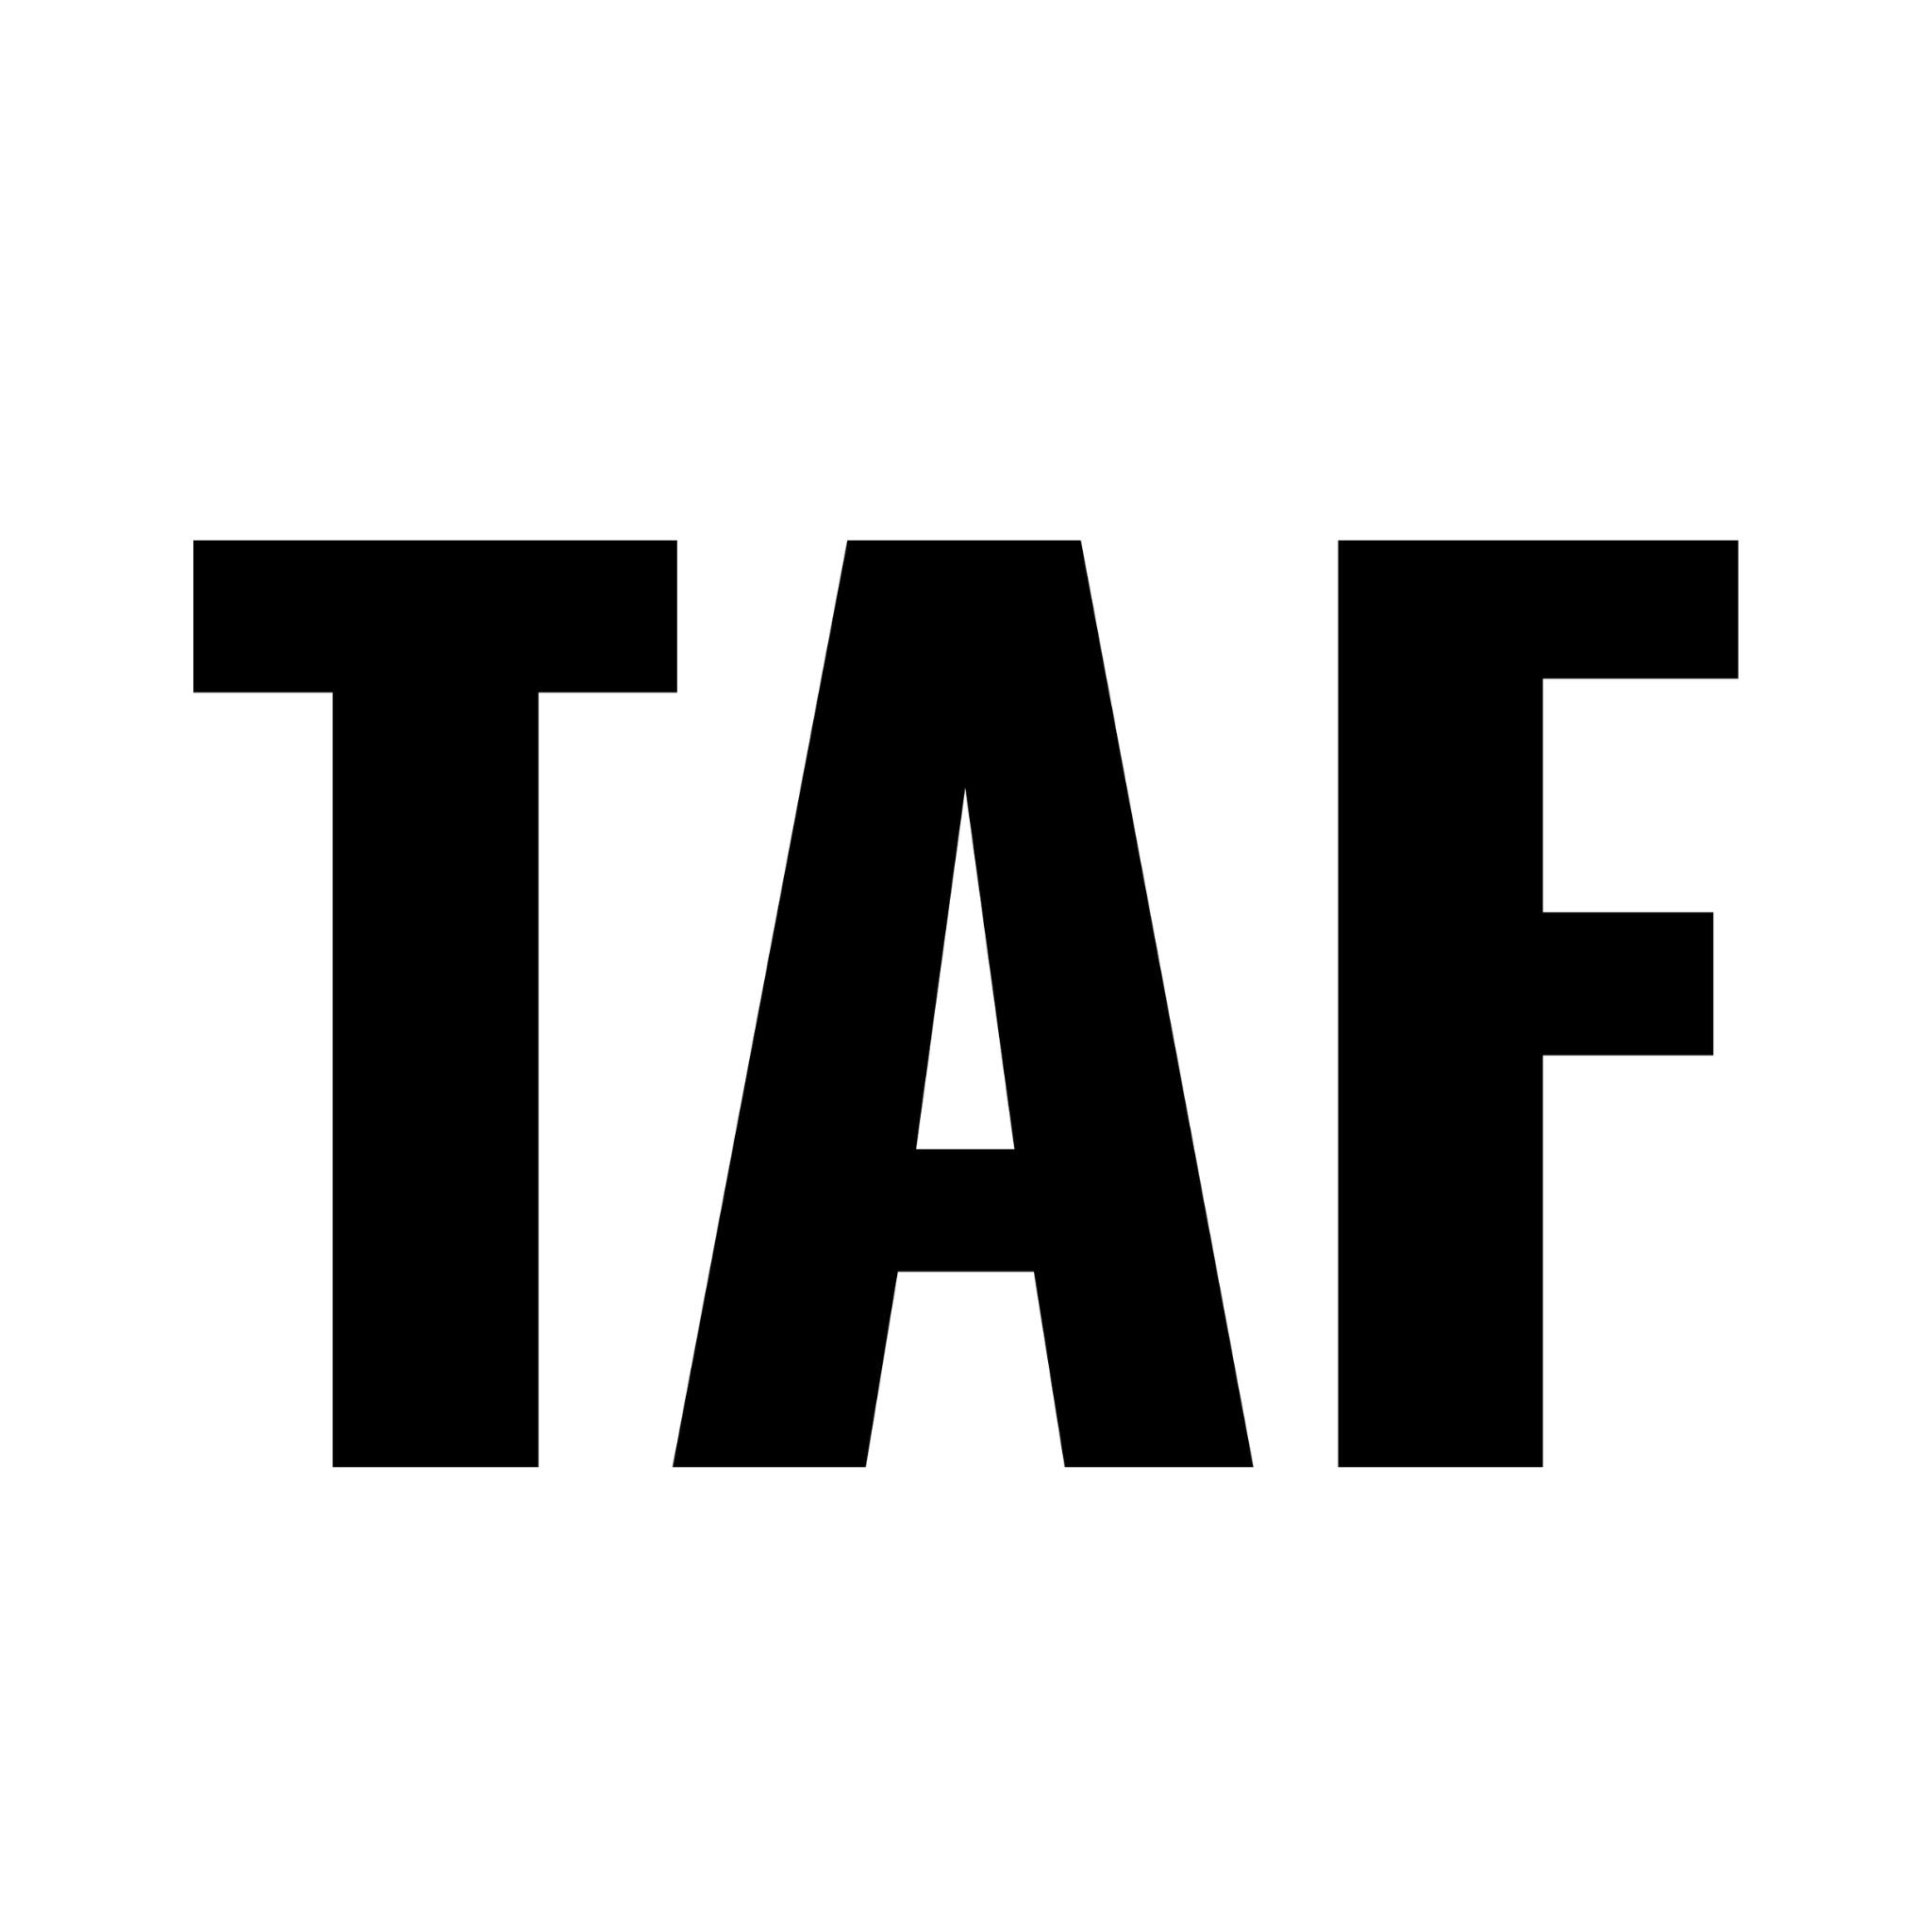 The Tiffany Antosz Foundation (TAF) logo